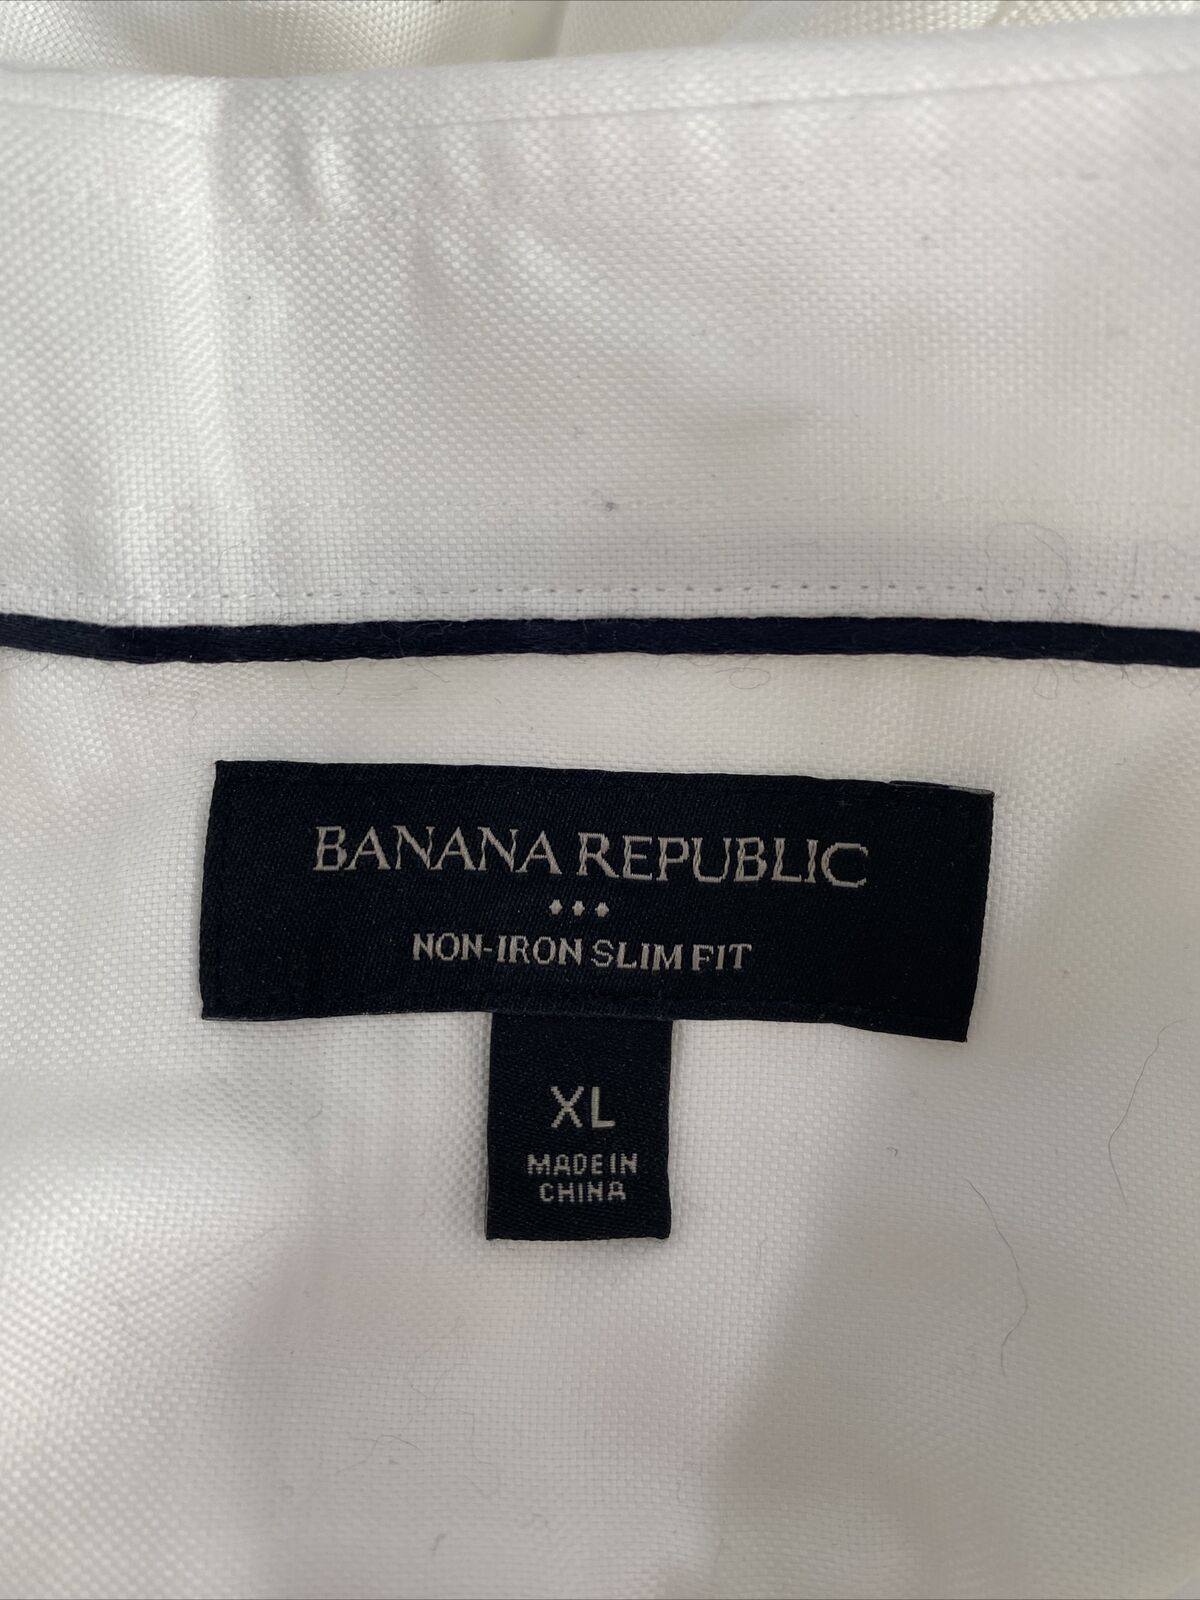 Banana Republic Men's White Non-Iron Slim Fit Button Up Casual Shirt - XL